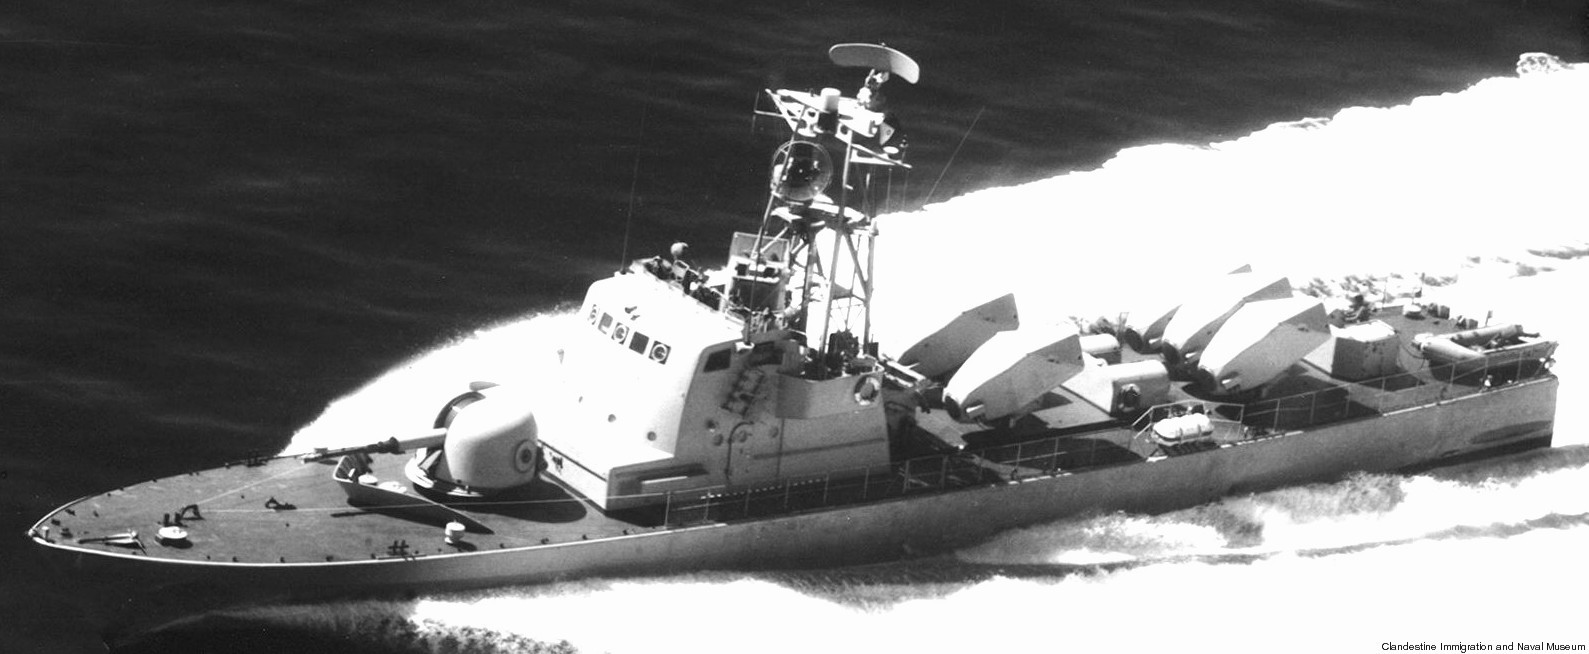 iai gabriel ssm anti-ship missile israel aerospace industries navy sa'ar corvette boat craft 08